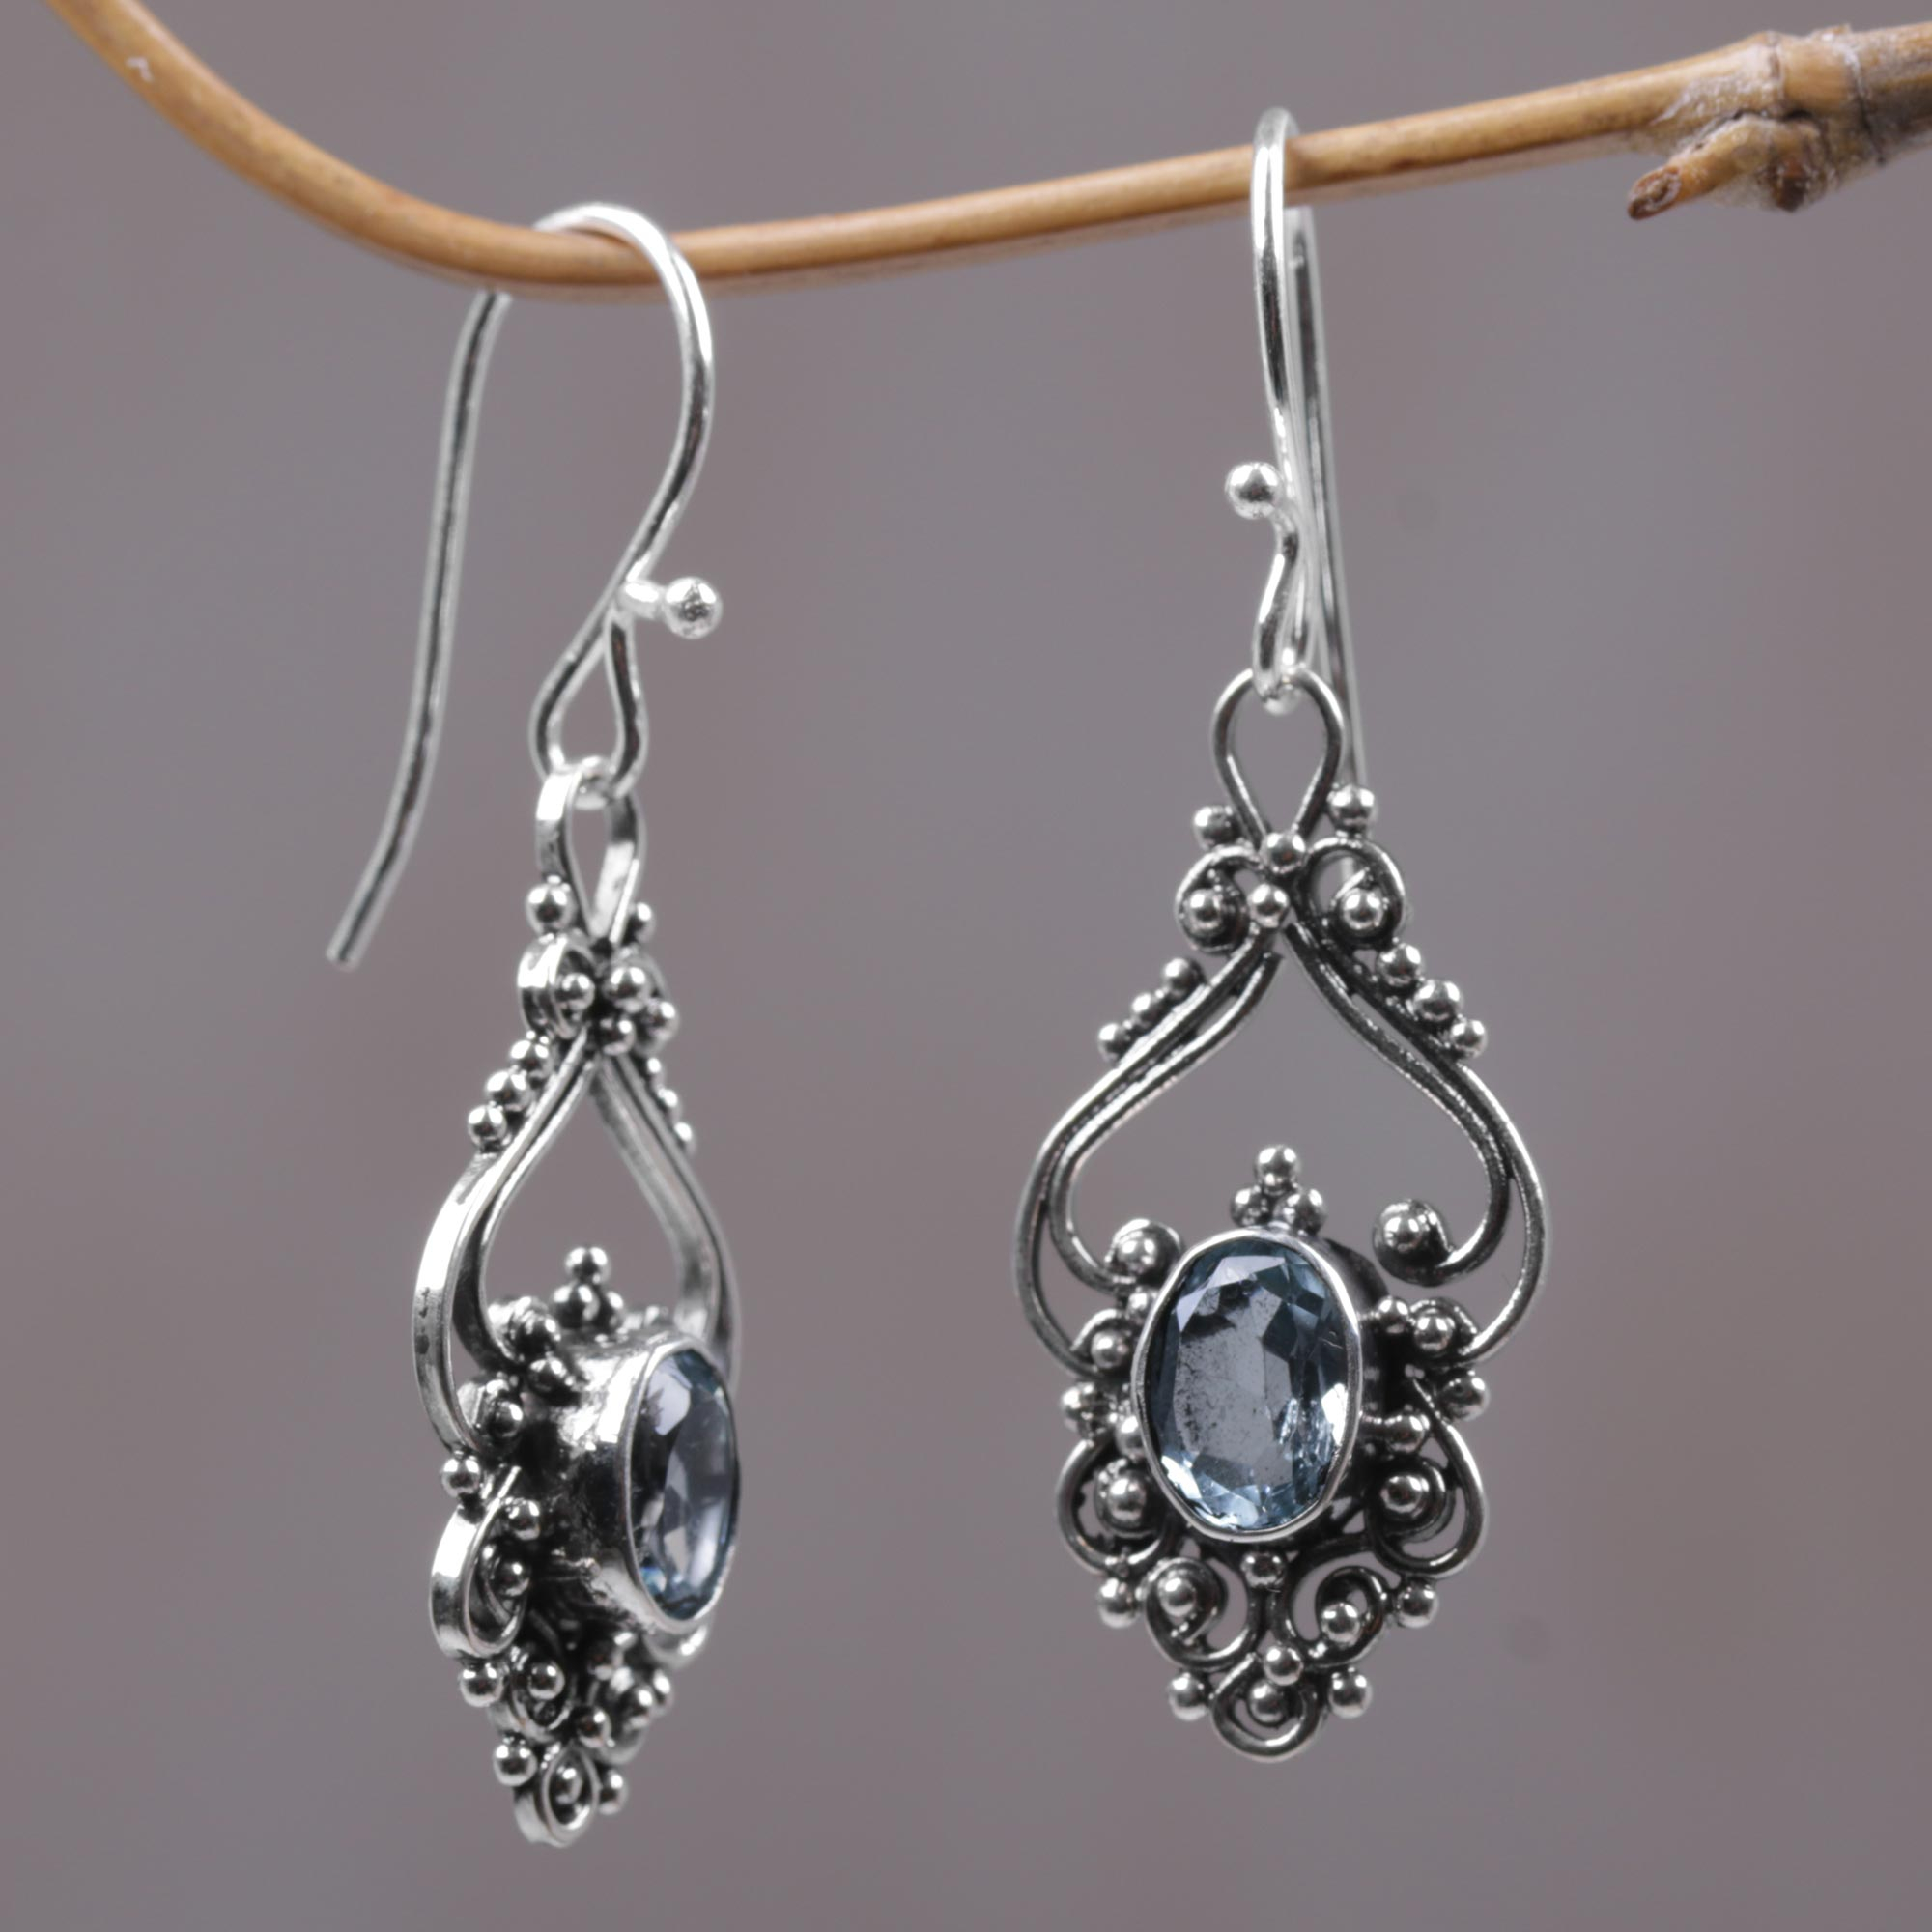 Bali Artisan Jewelry Blue Topaz Sterling Silver Earrings - Sigh | NOVICA